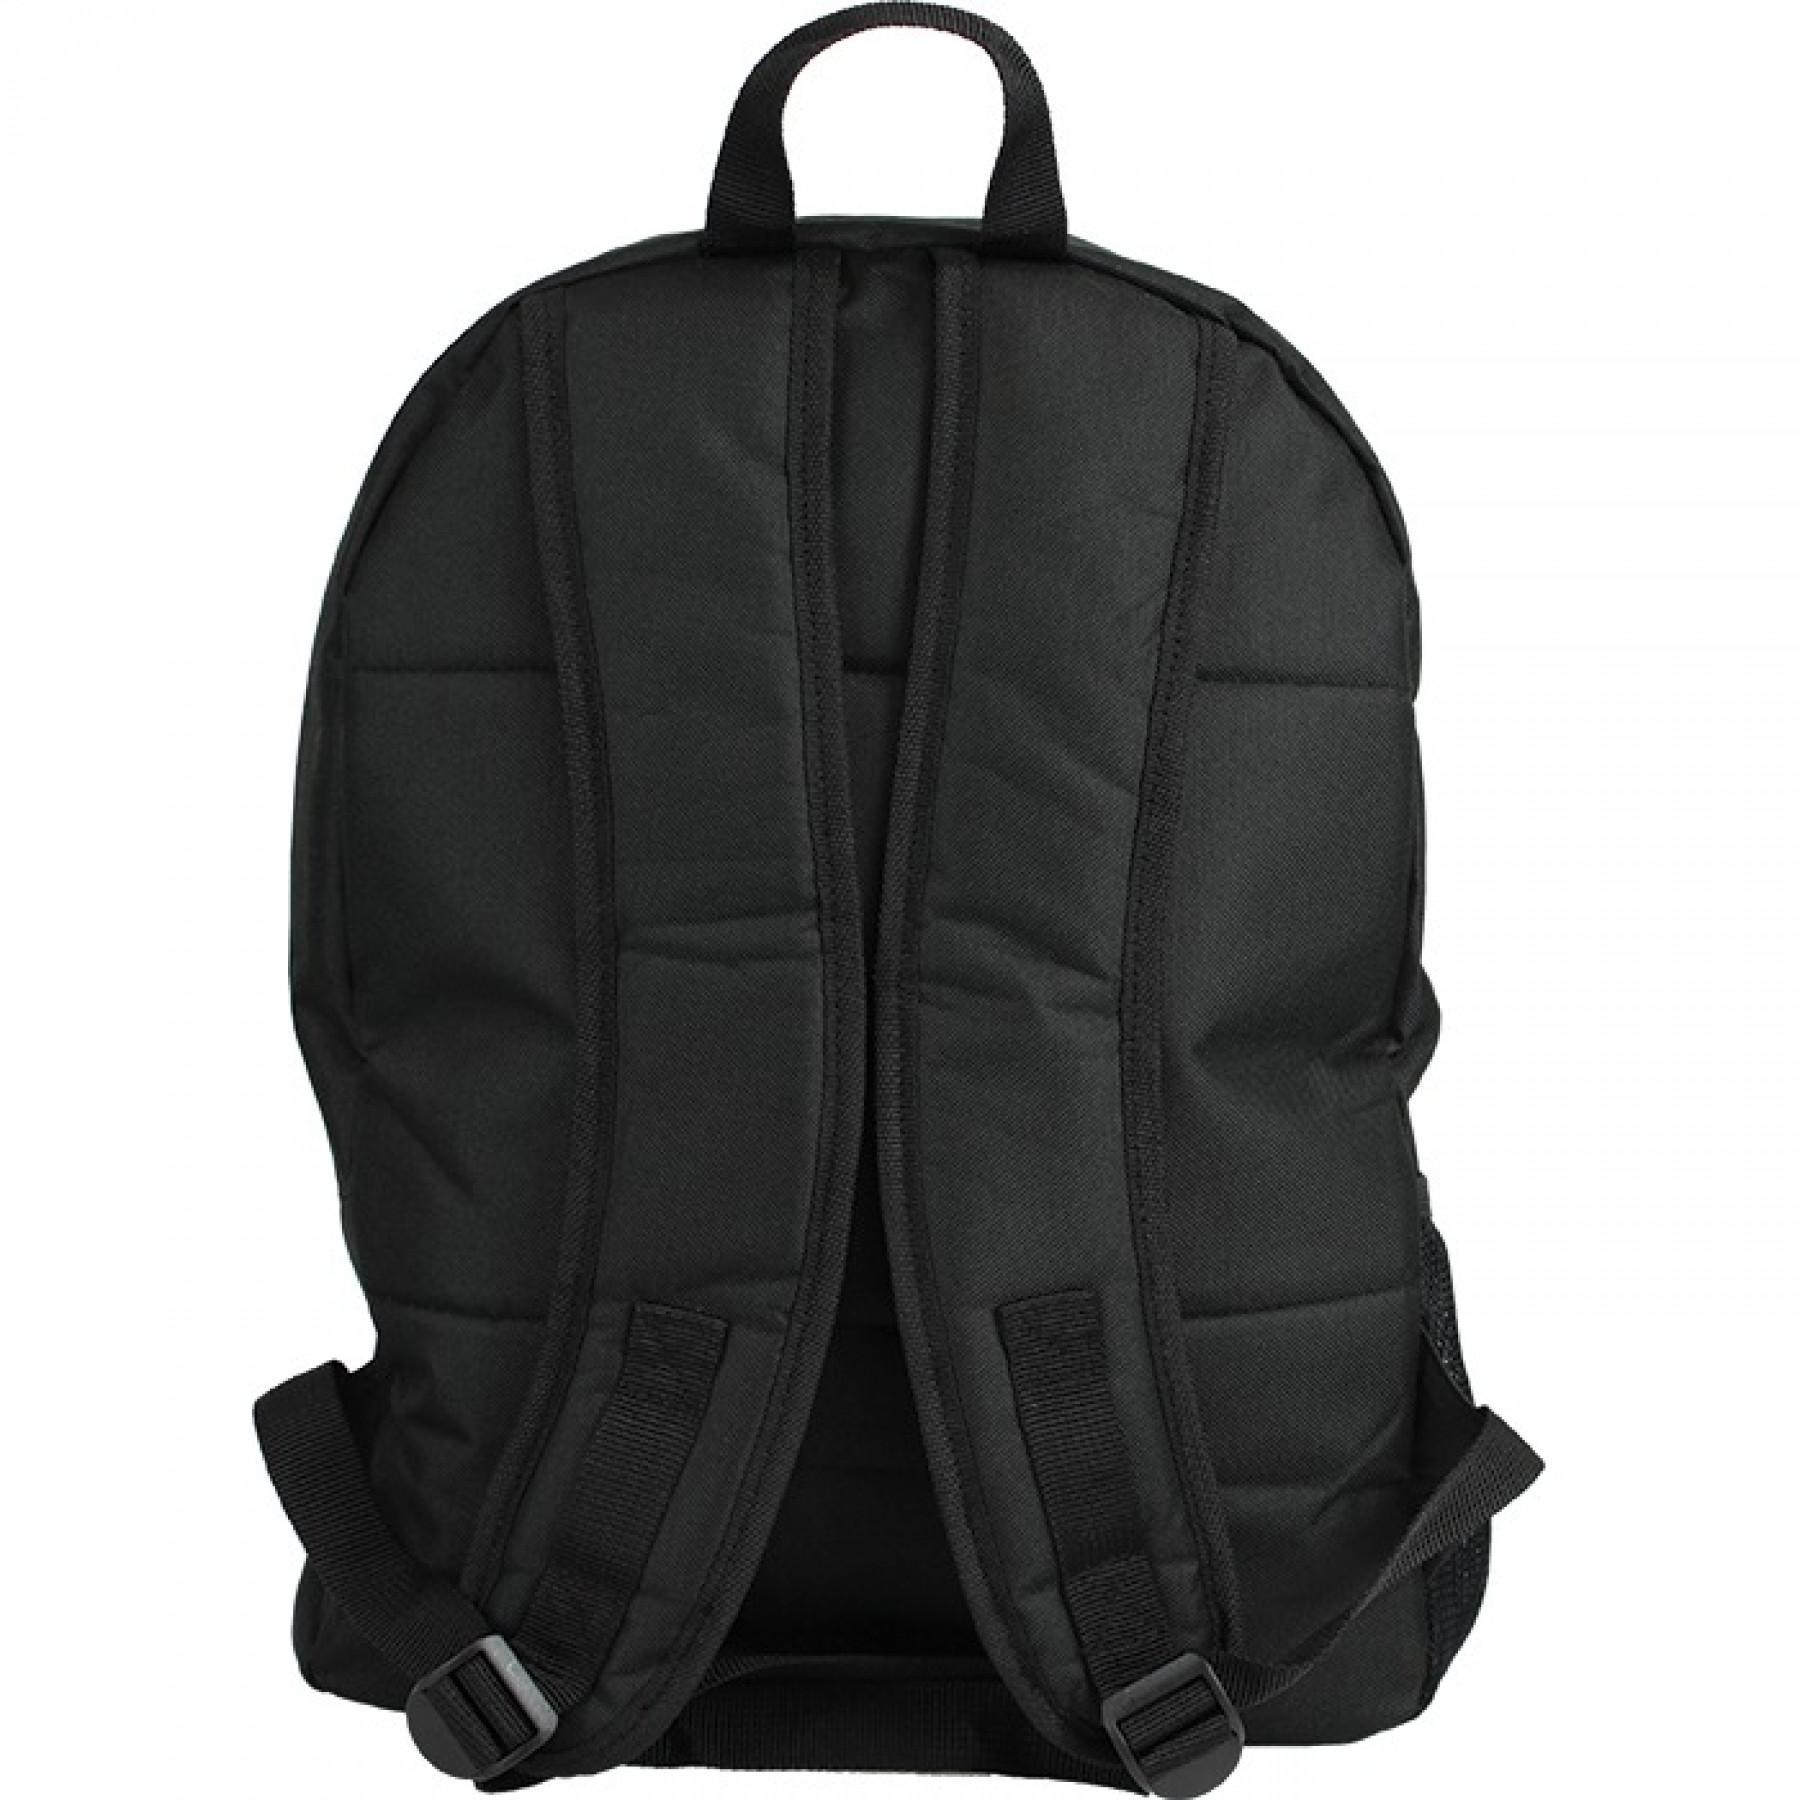 Backpack Velia - Backpacks - Bags - Equipment